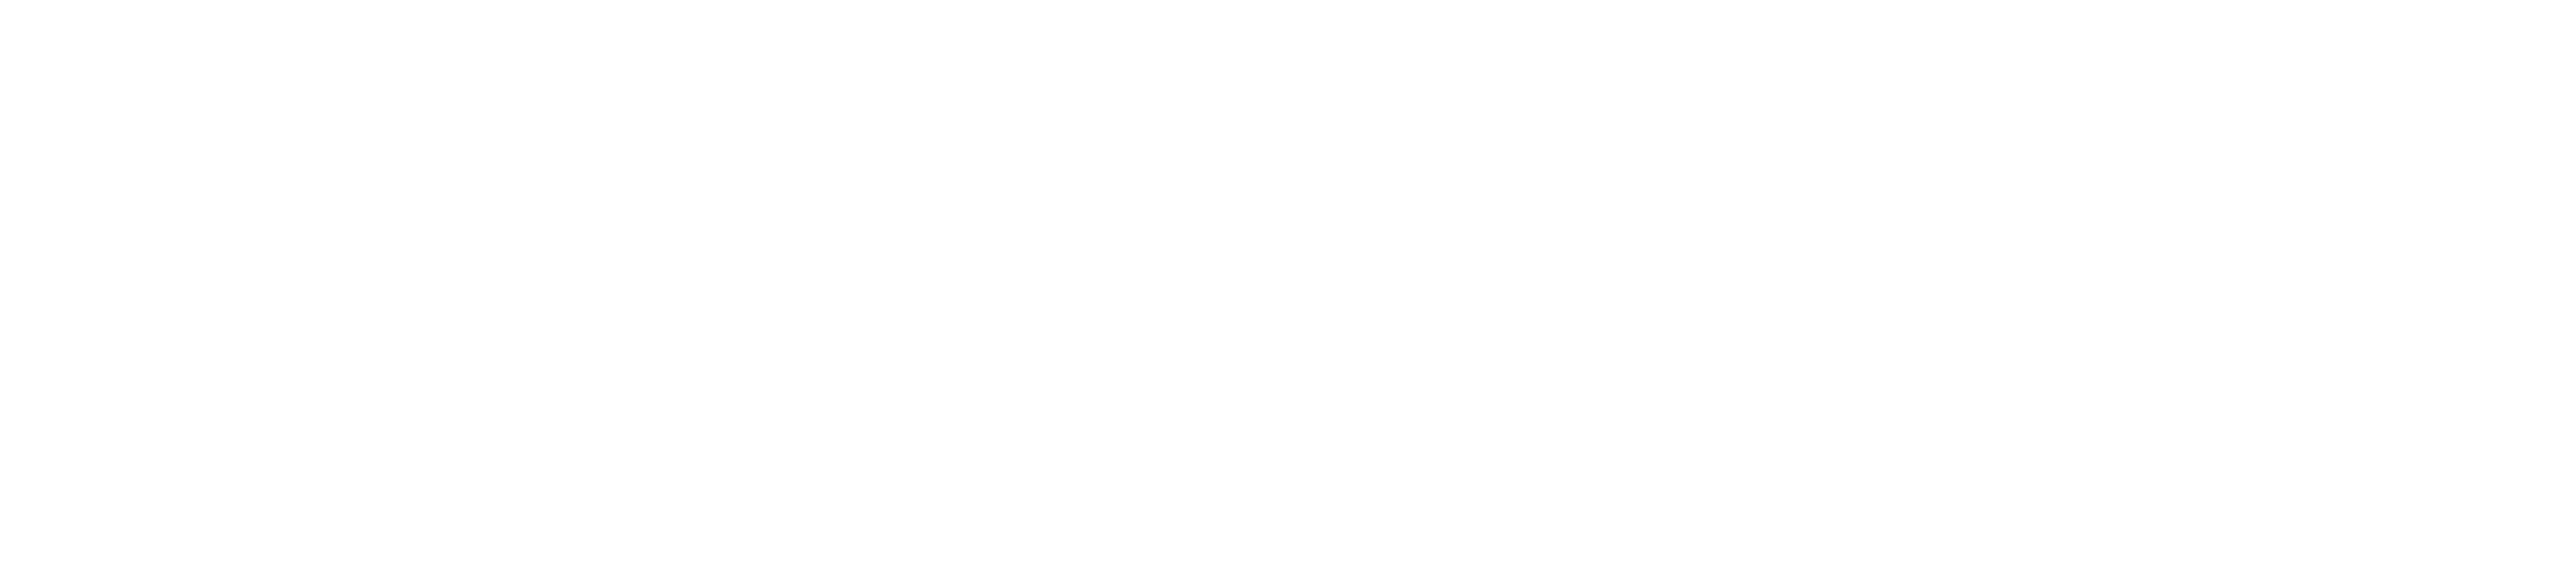 title logo